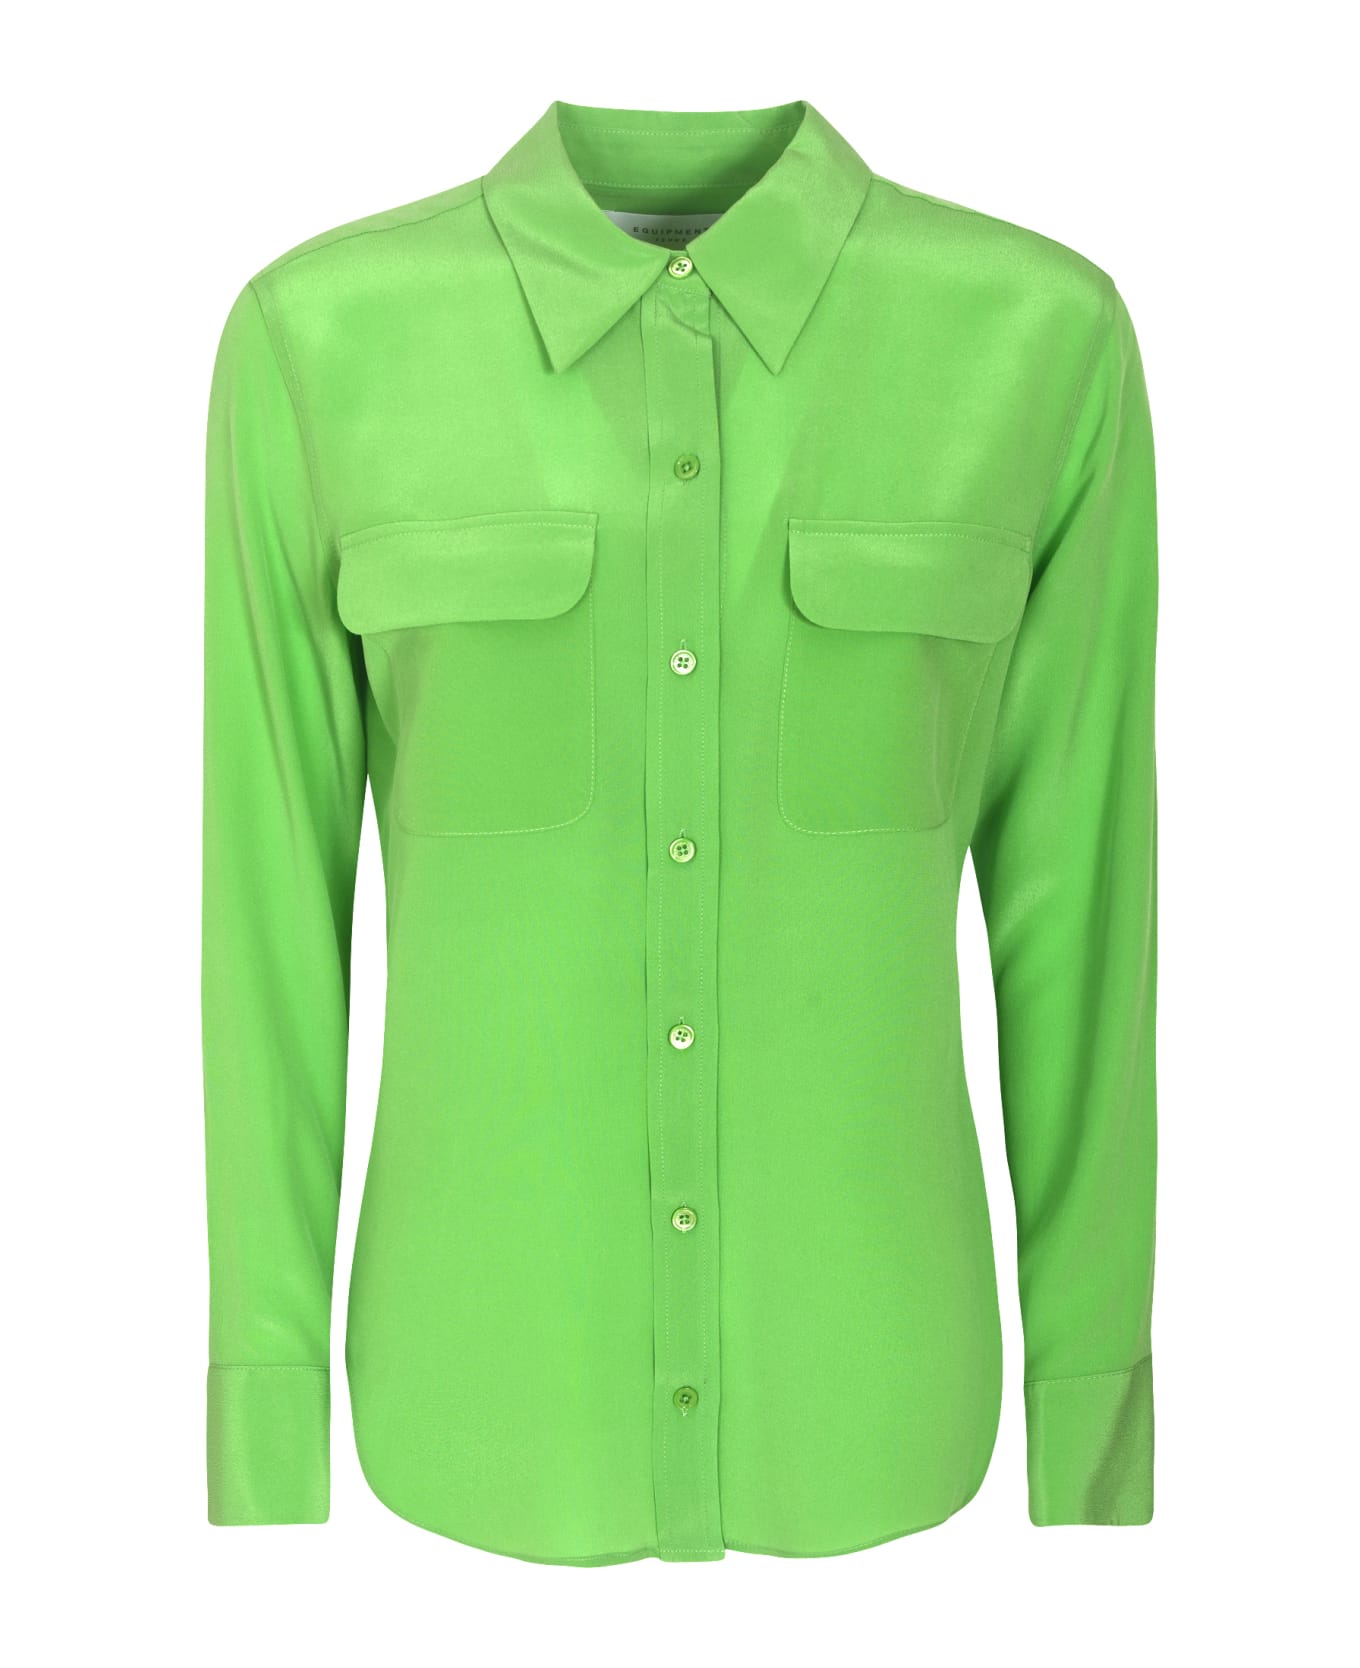 Equipment Round Hem Patched Pocket Plain Shirt - Vibrant Green